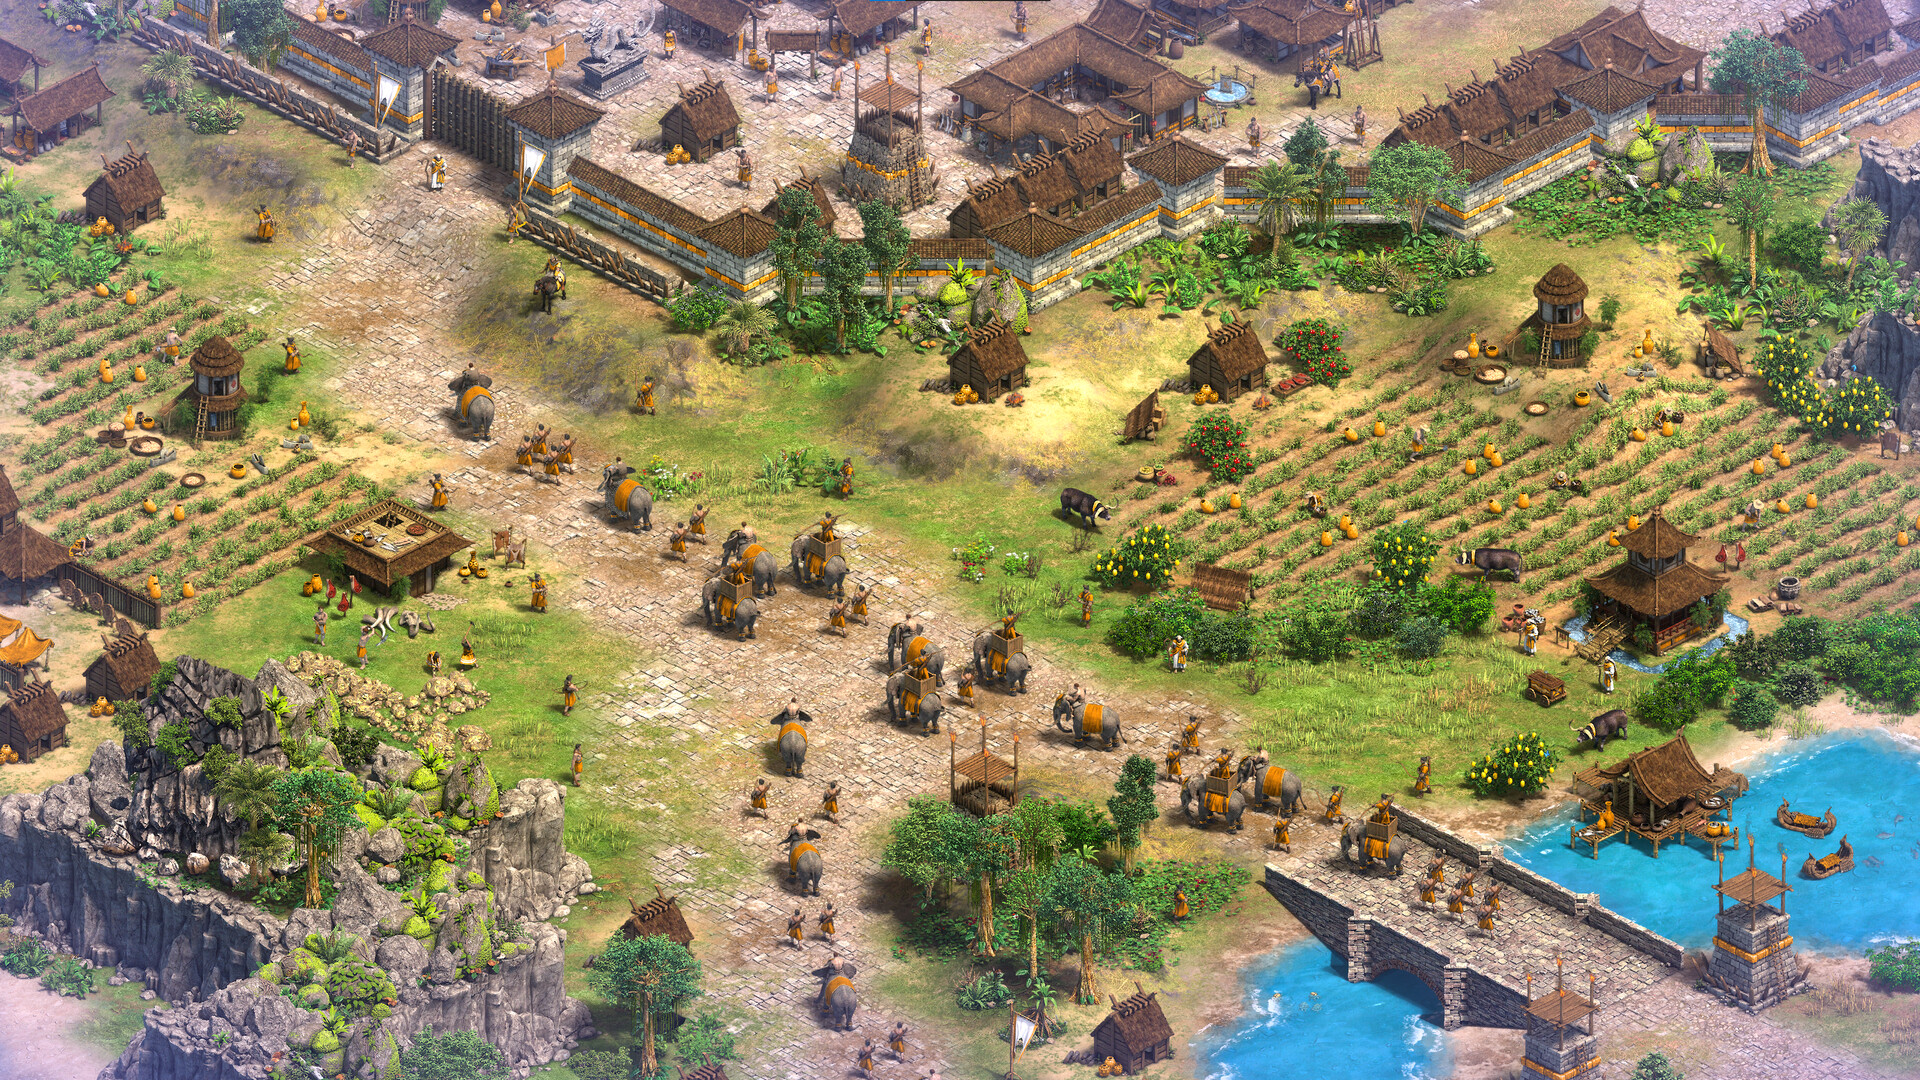 Age Of Empires II: Definitive Edition - Return Of Rome DLC XBOX One / Xbox Series X,S / Windows 10 CD Key